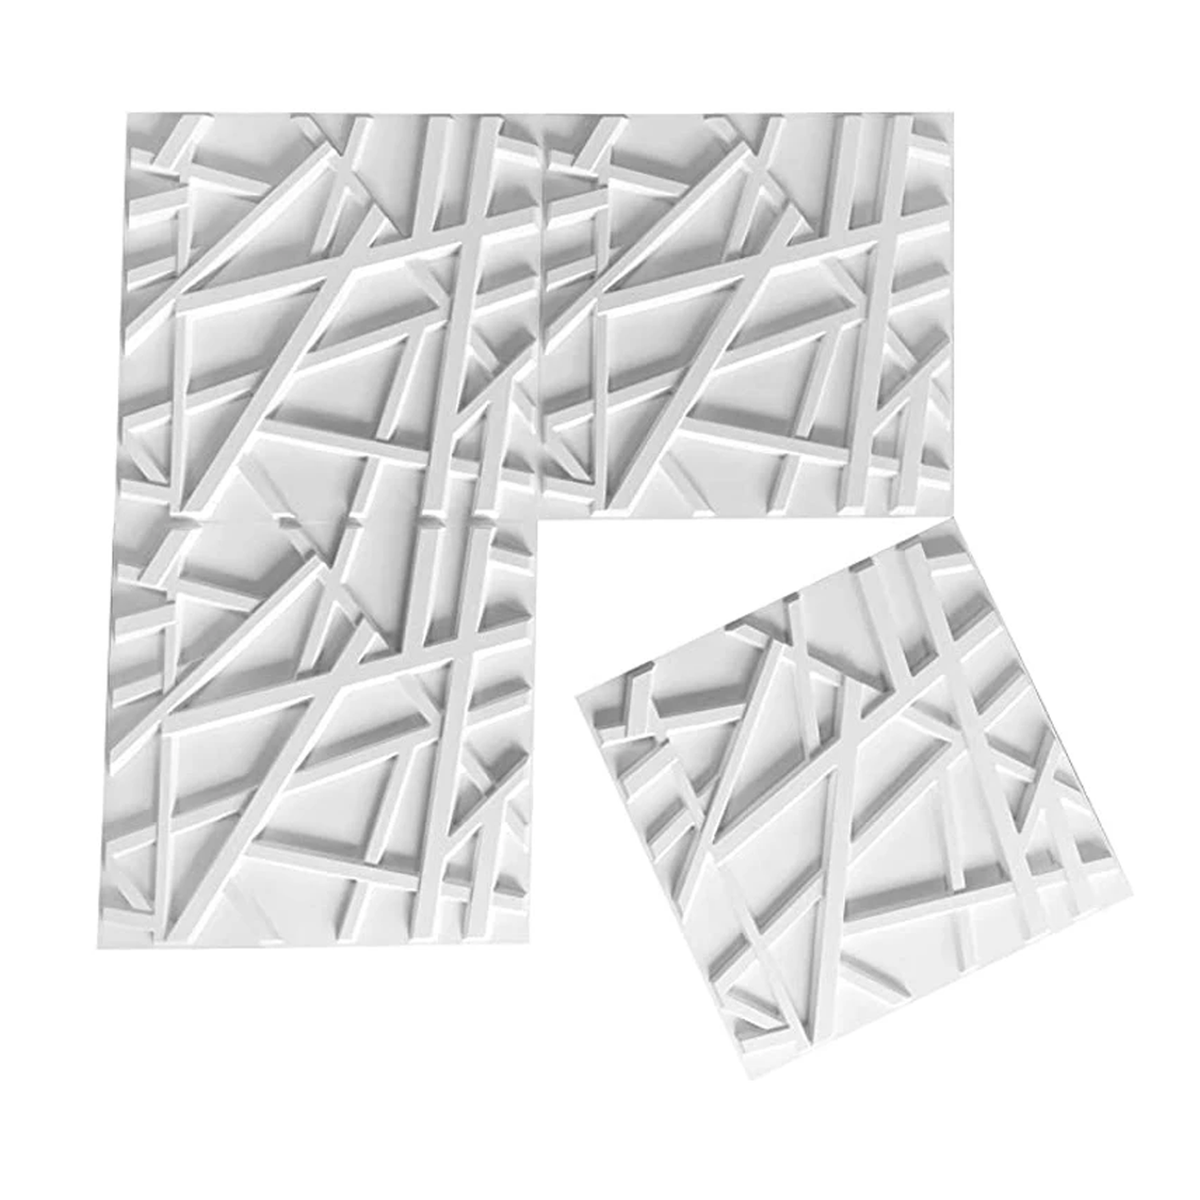 Geometric 3D Wall Panel - Diamond Carved Design - 50x50cm